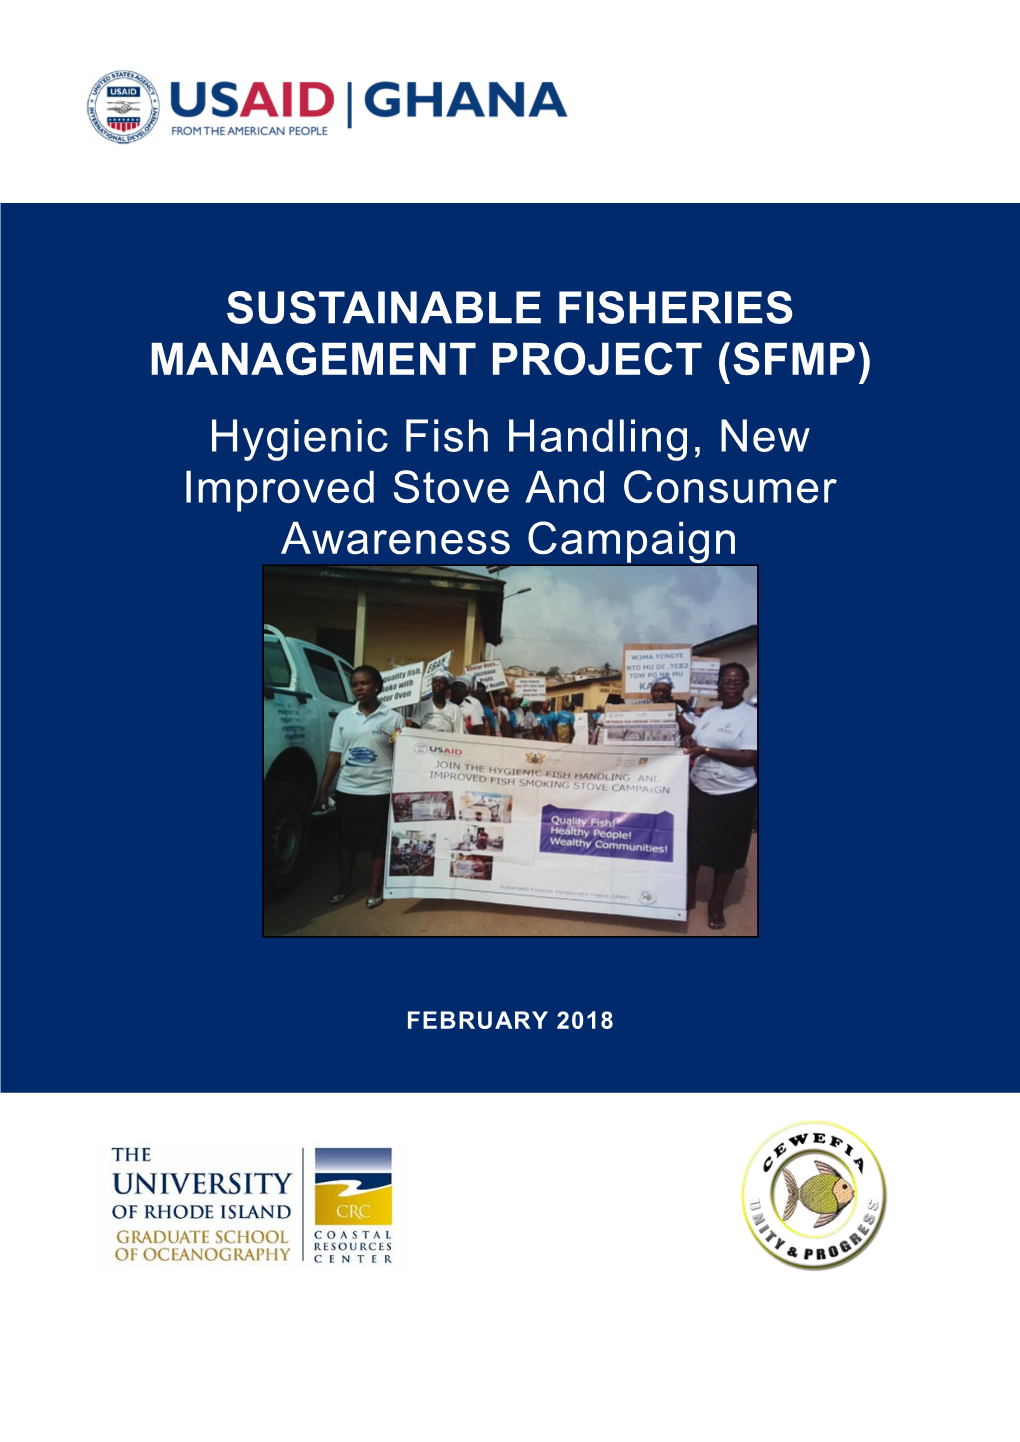 Hygienic Fish Handling, New Improved Stove Anconsumer